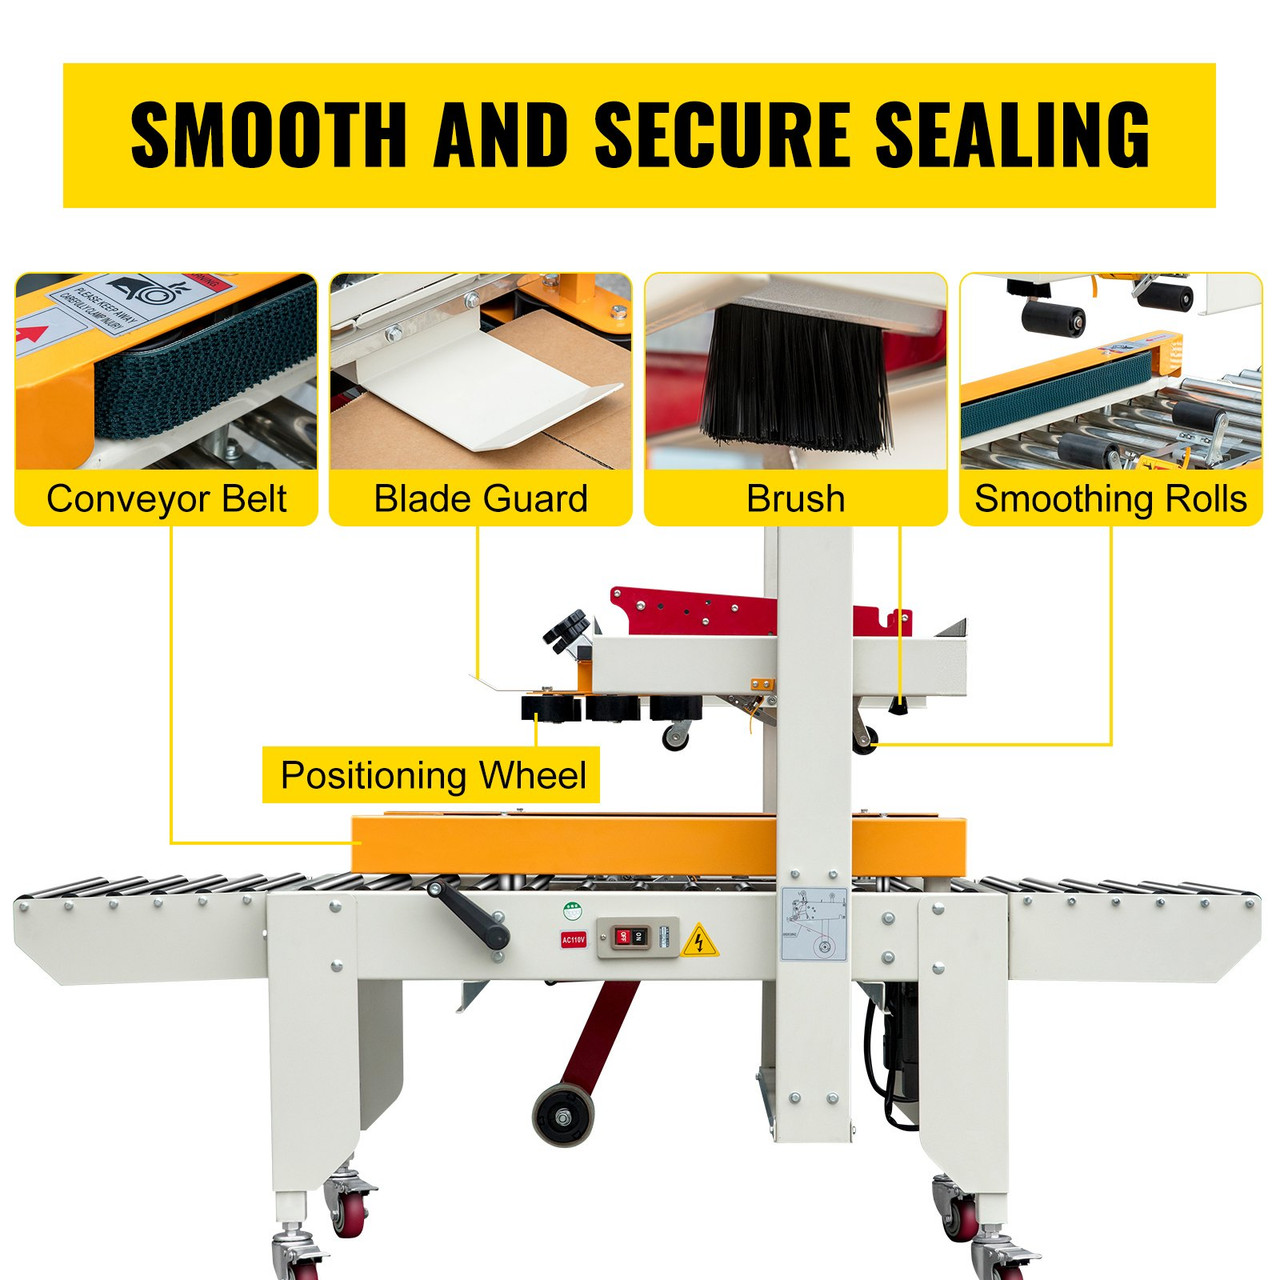 Box Sealing Machine, 180W Case Sealer, Carton Sealer 0-18 m/min in Conveying Speed, Automatic Box Sealer, Double-Flap Case Sealer, Carton Taping Machine with Four Rolls of Tape